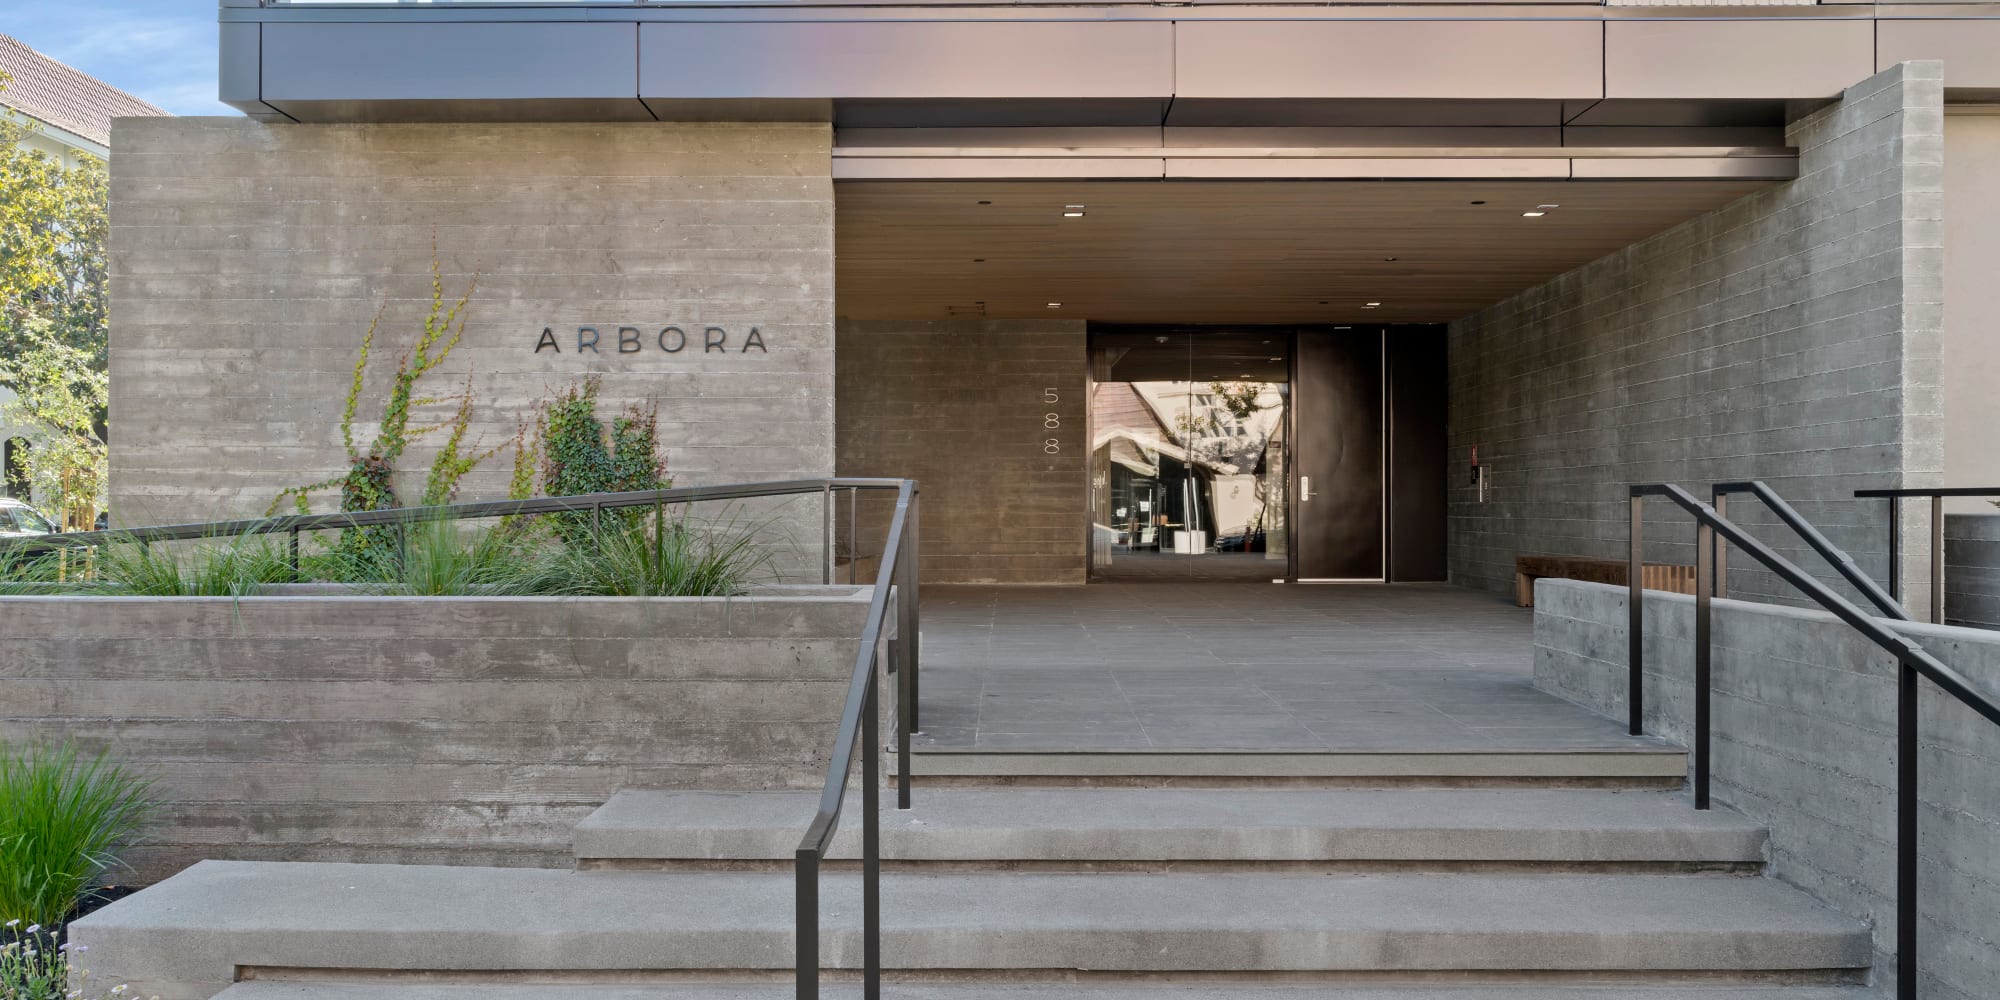 Entrance to Arbora Palo Alto in Palo Alto, California